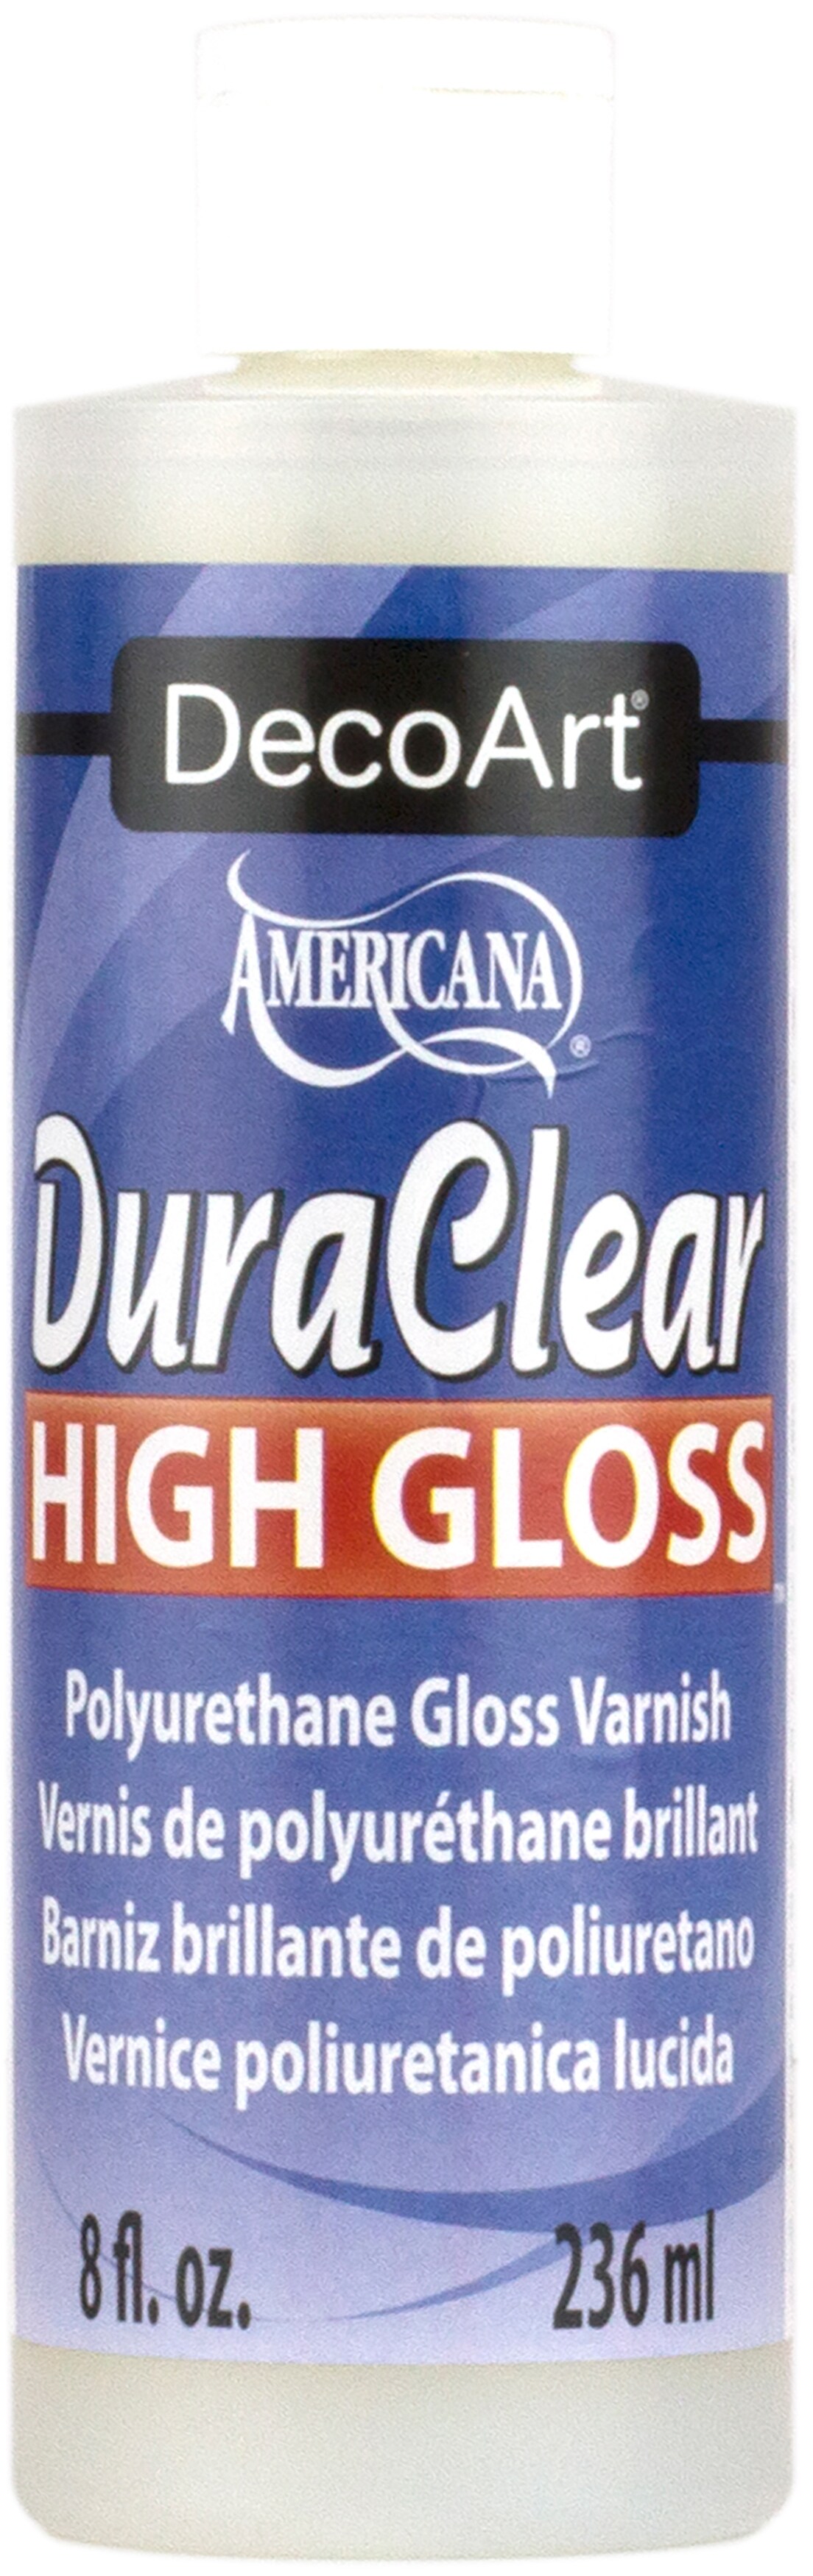 DecoArt DuraClear High Gloss Varnish 8oz